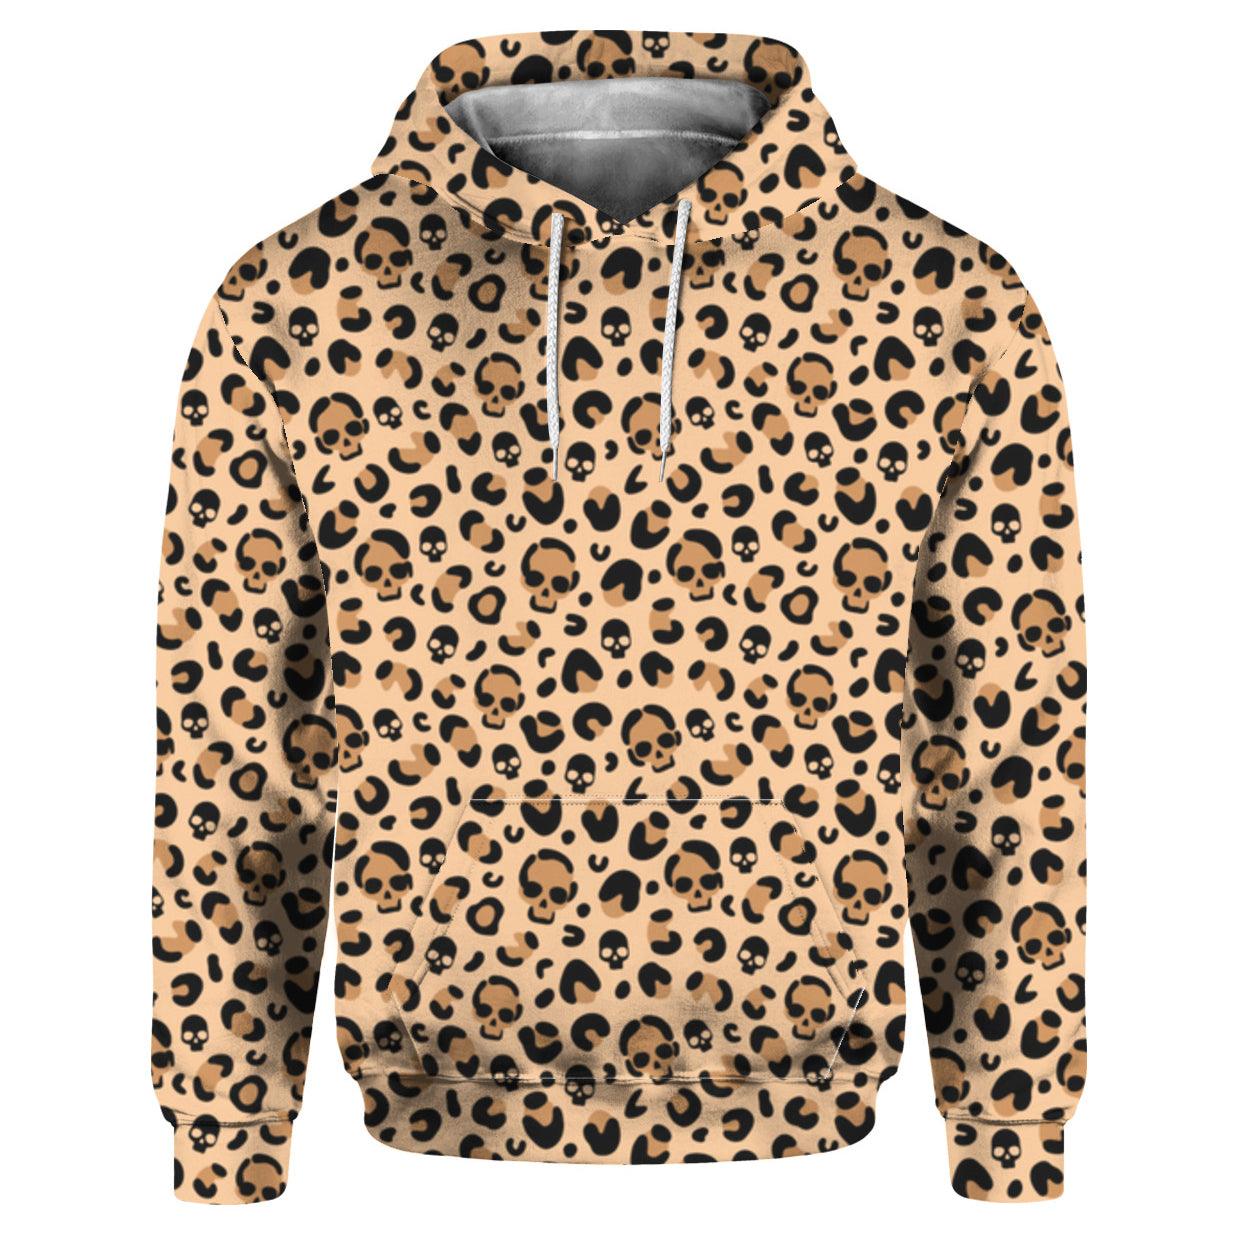 Leopard Skin Seamless Skull All Over Print Unisex Pullover Hoodie, Fashionable Outerwear Full Printed - Wonder Skull